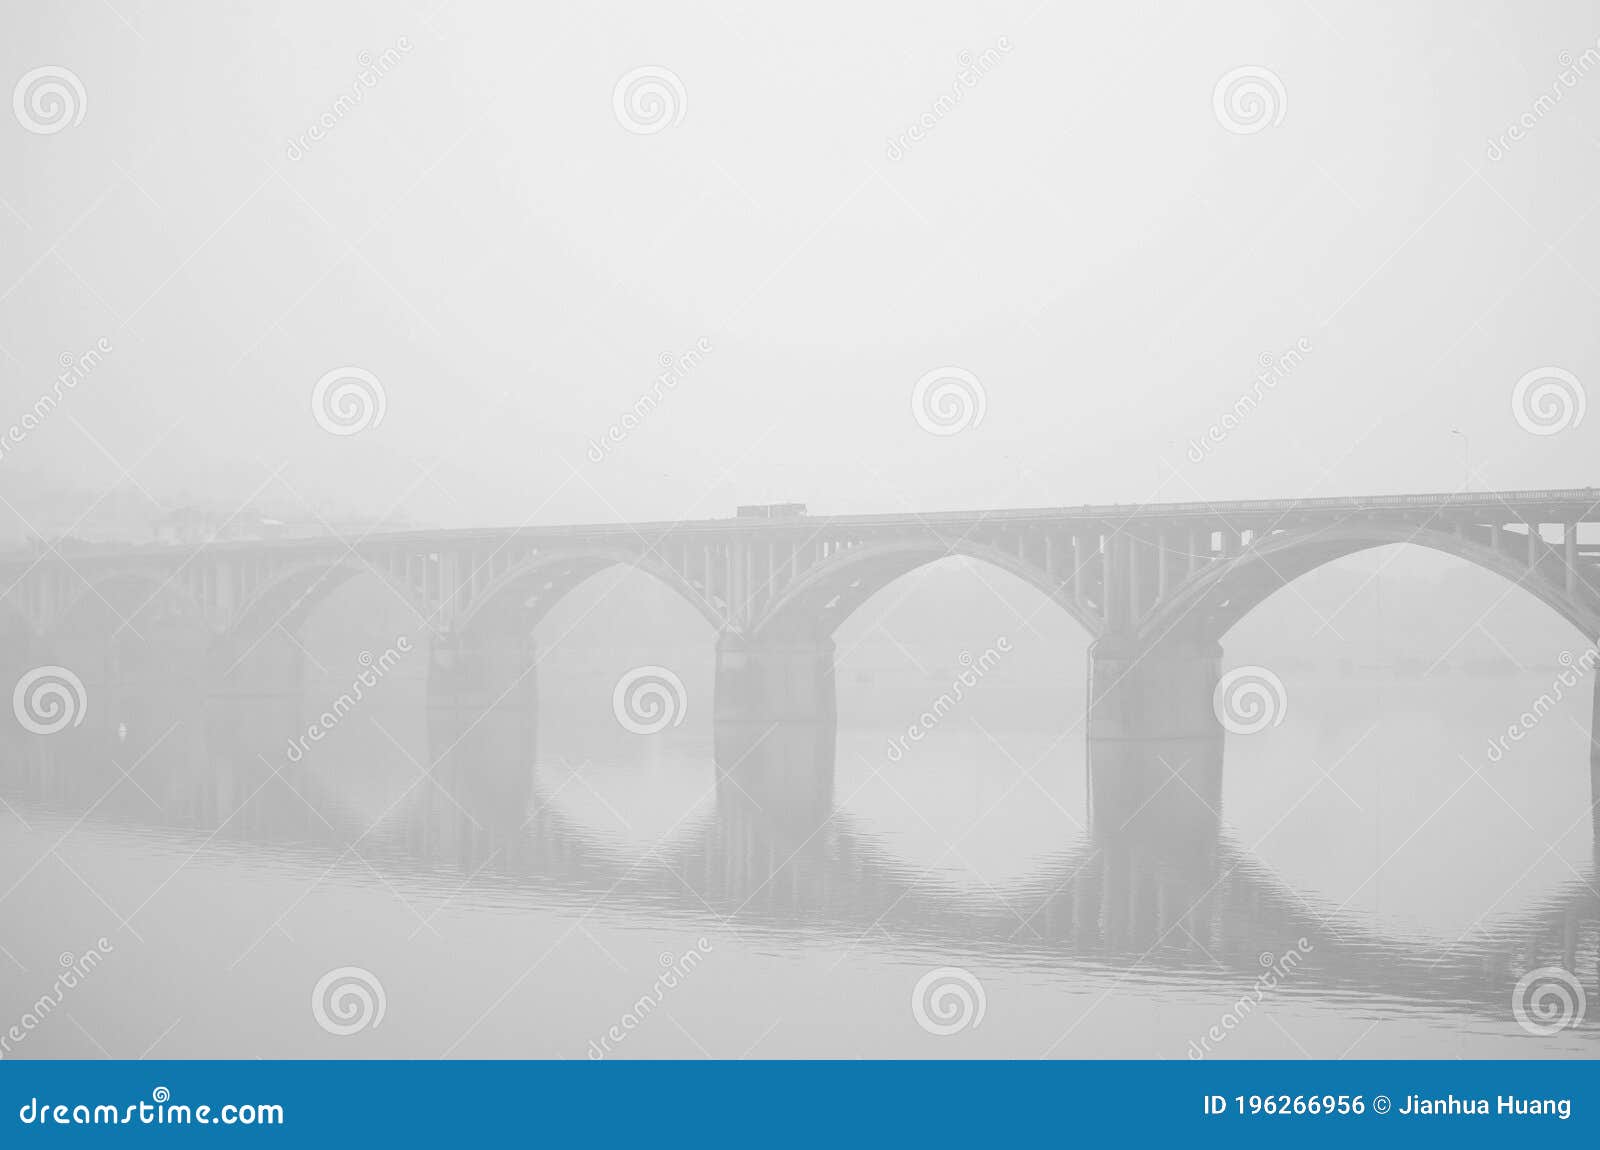 donghe bridge in winterÃ¯Â¼Åganzhou